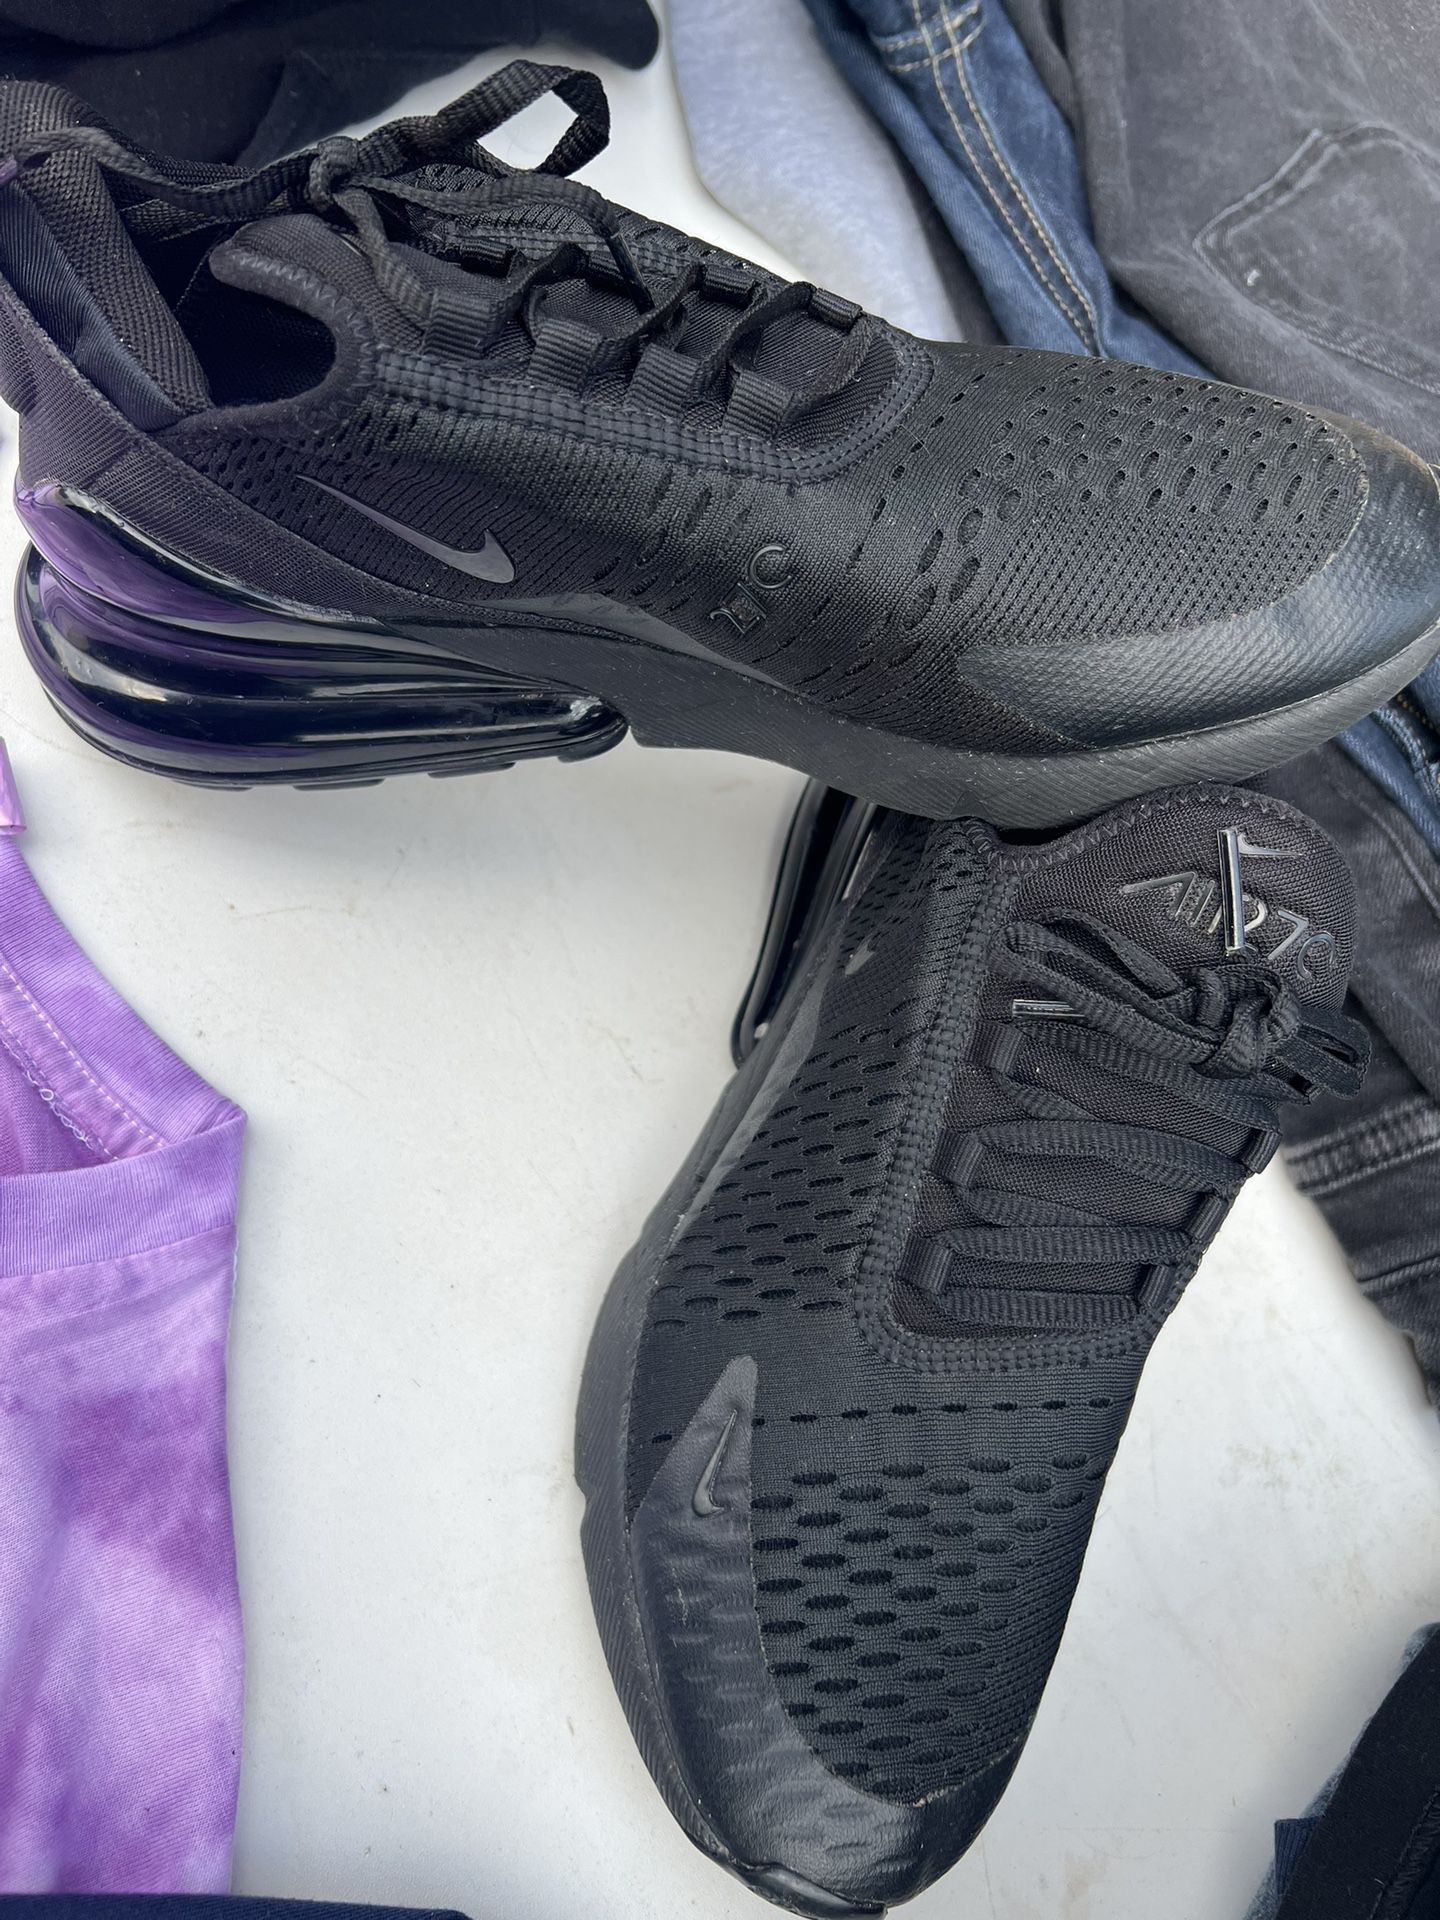 Jordan & Nike 270 